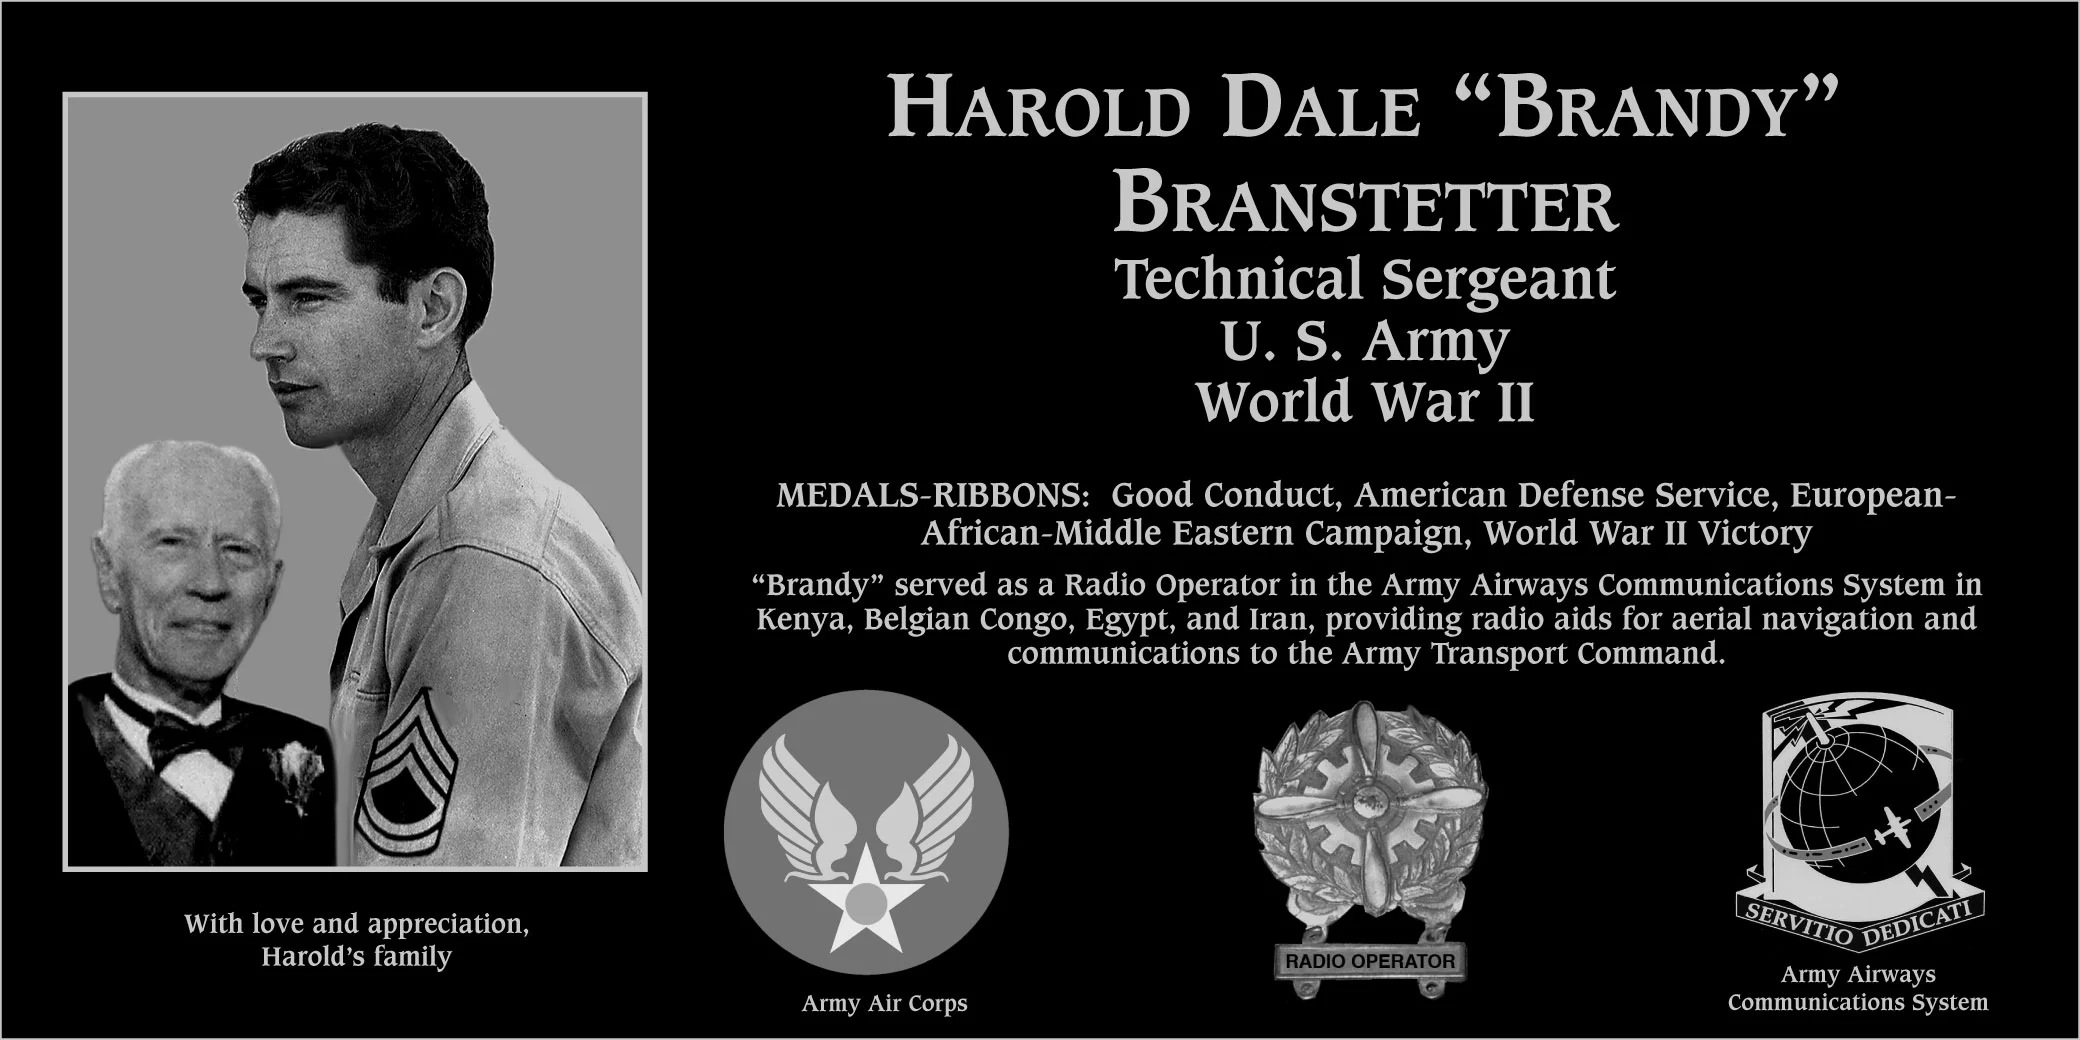 Harold Dale “Brandy” Brandstetter